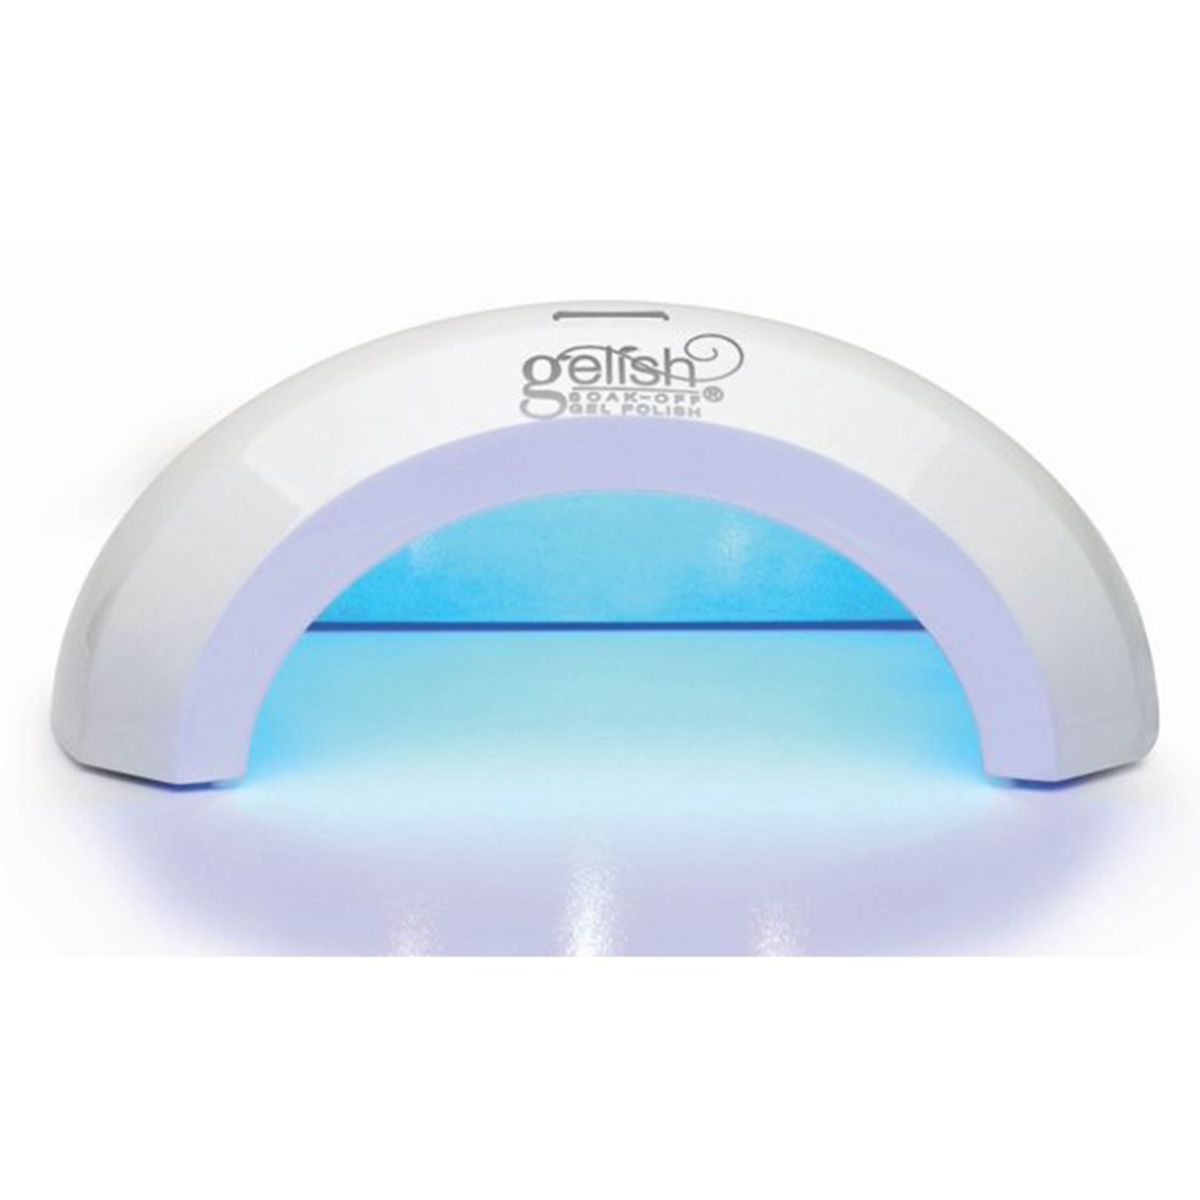 Gelish Mini Pro LED Curing Gel Nail Polish Salon Lamp